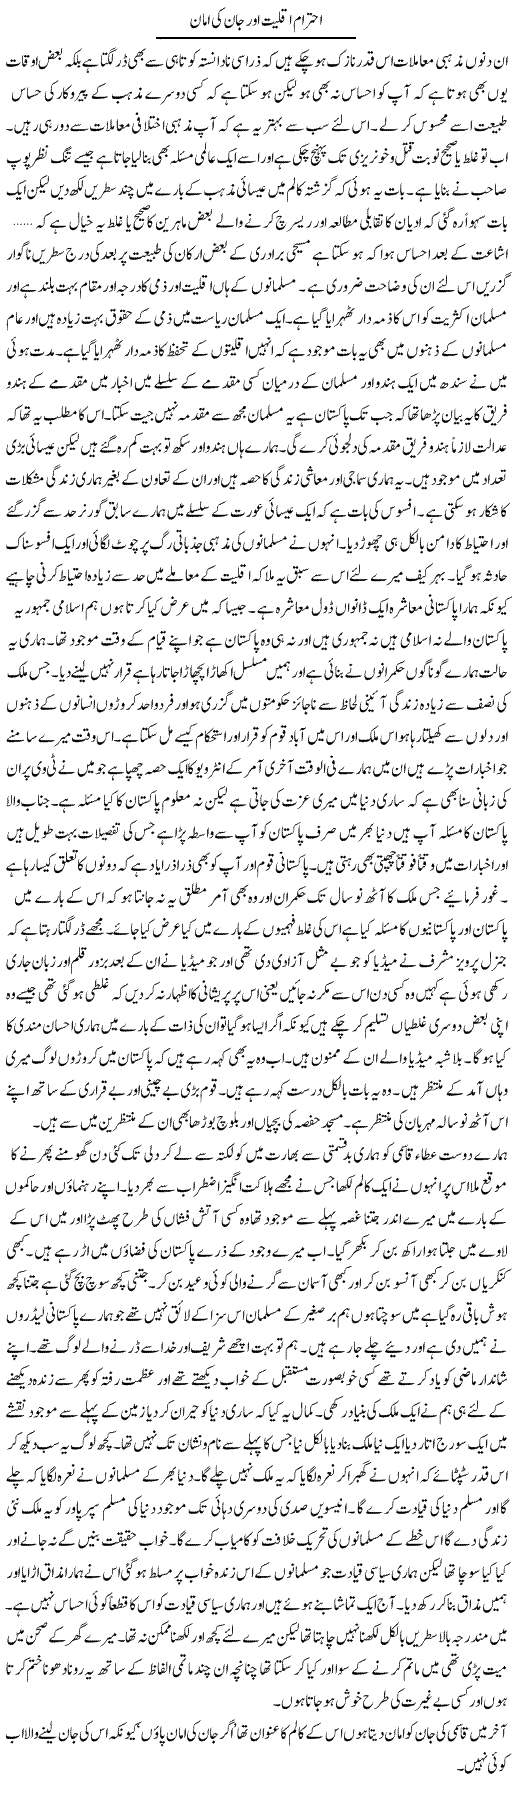 Religious Issues Express Column Abdul Qadir 15 January 2011